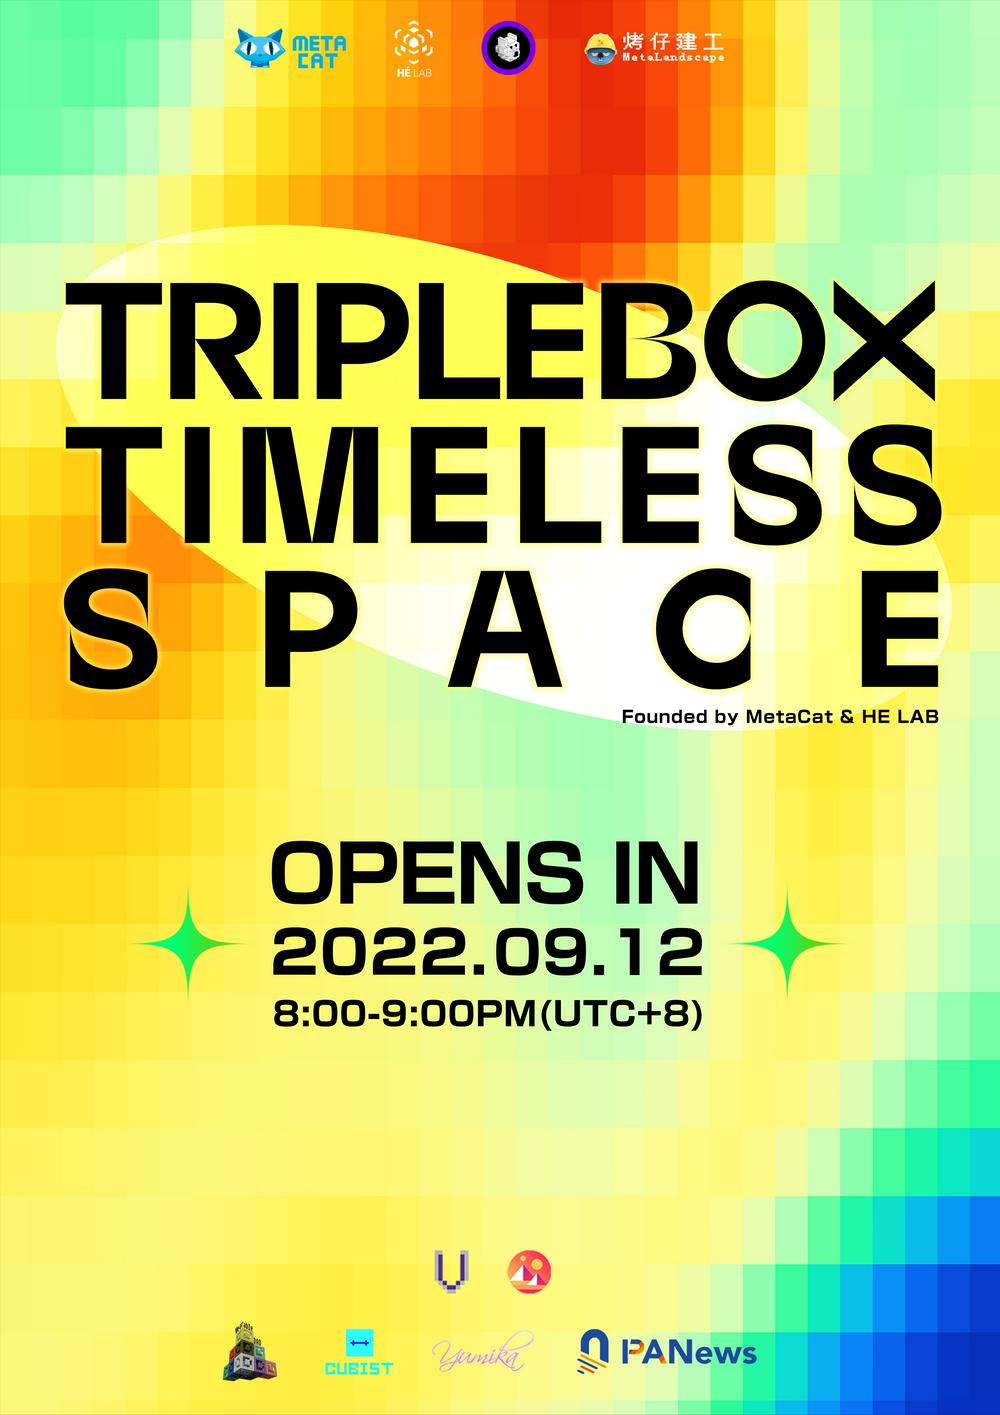 TripleBox不限时空间将艺术与时尚带入元宇宙